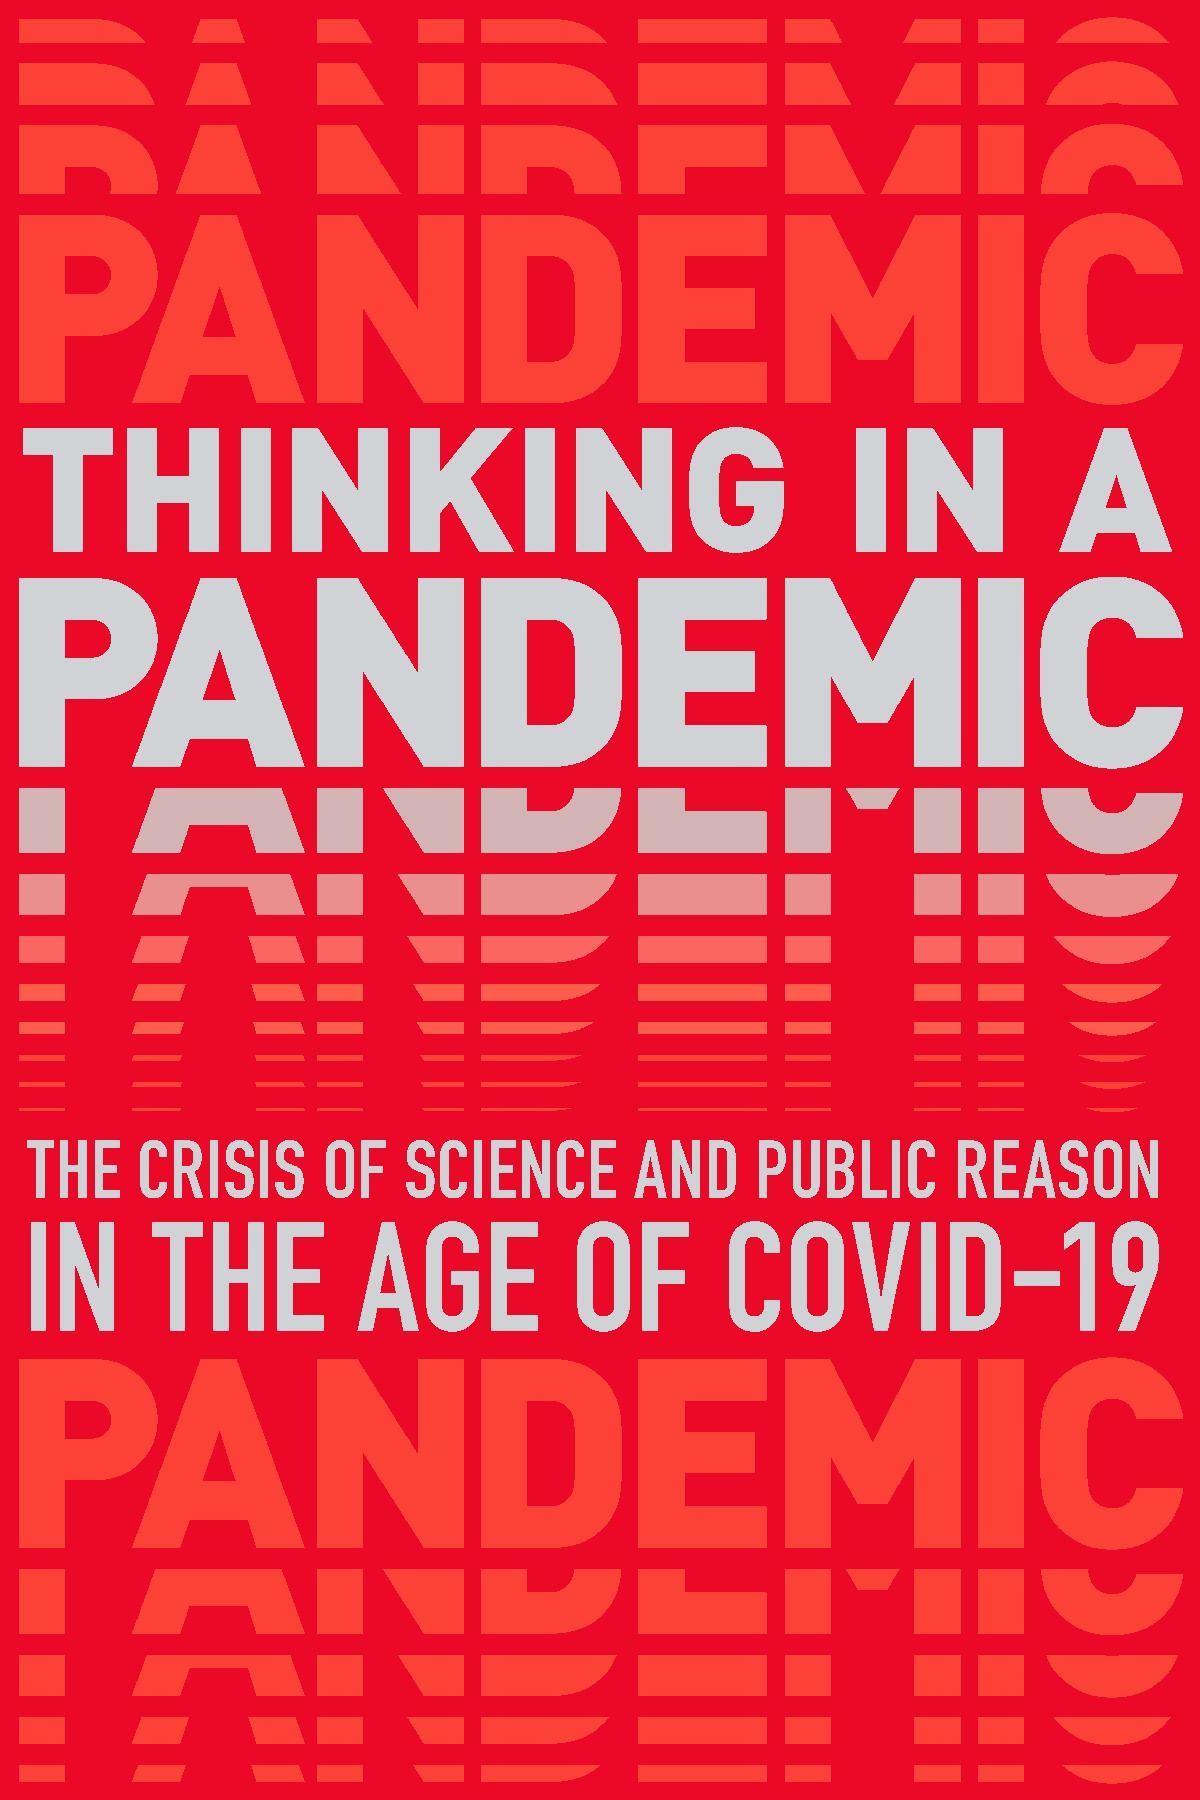 Thinking_in_a_pandemic_cover-f2768a45e85ff94967db679ff4f538d1.jpg